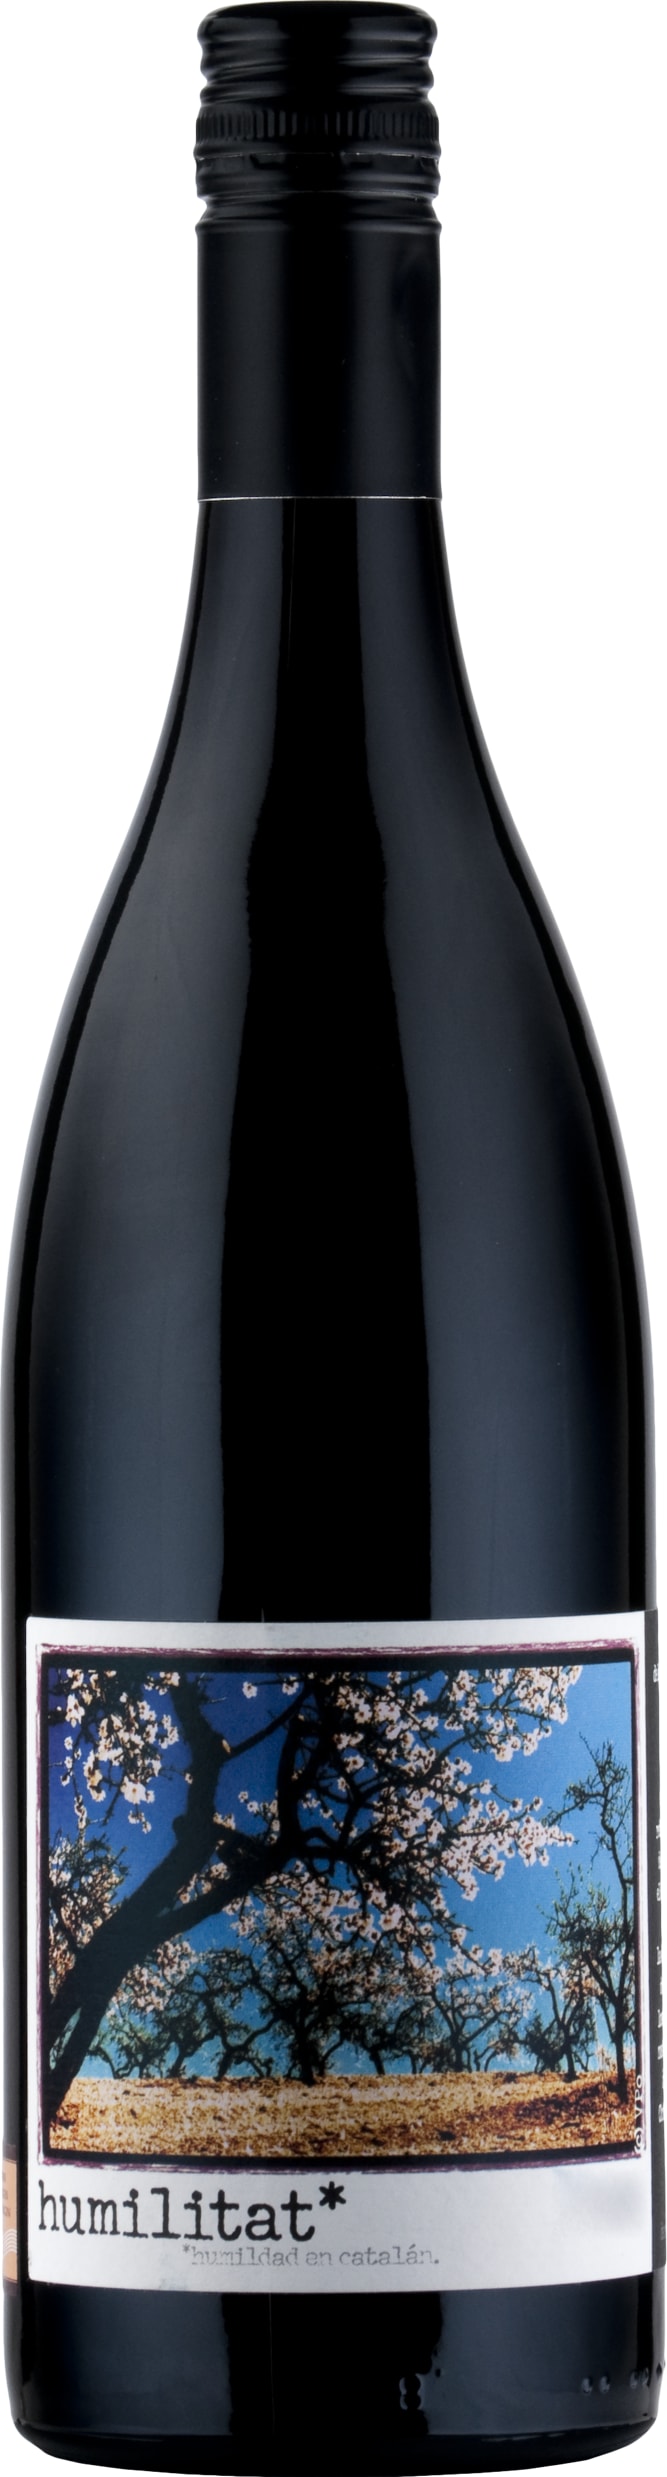 Franck Massard Humilitat Priorat 2019 75cl - Buy Franck Massard Wines from GREAT WINES DIRECT wine shop